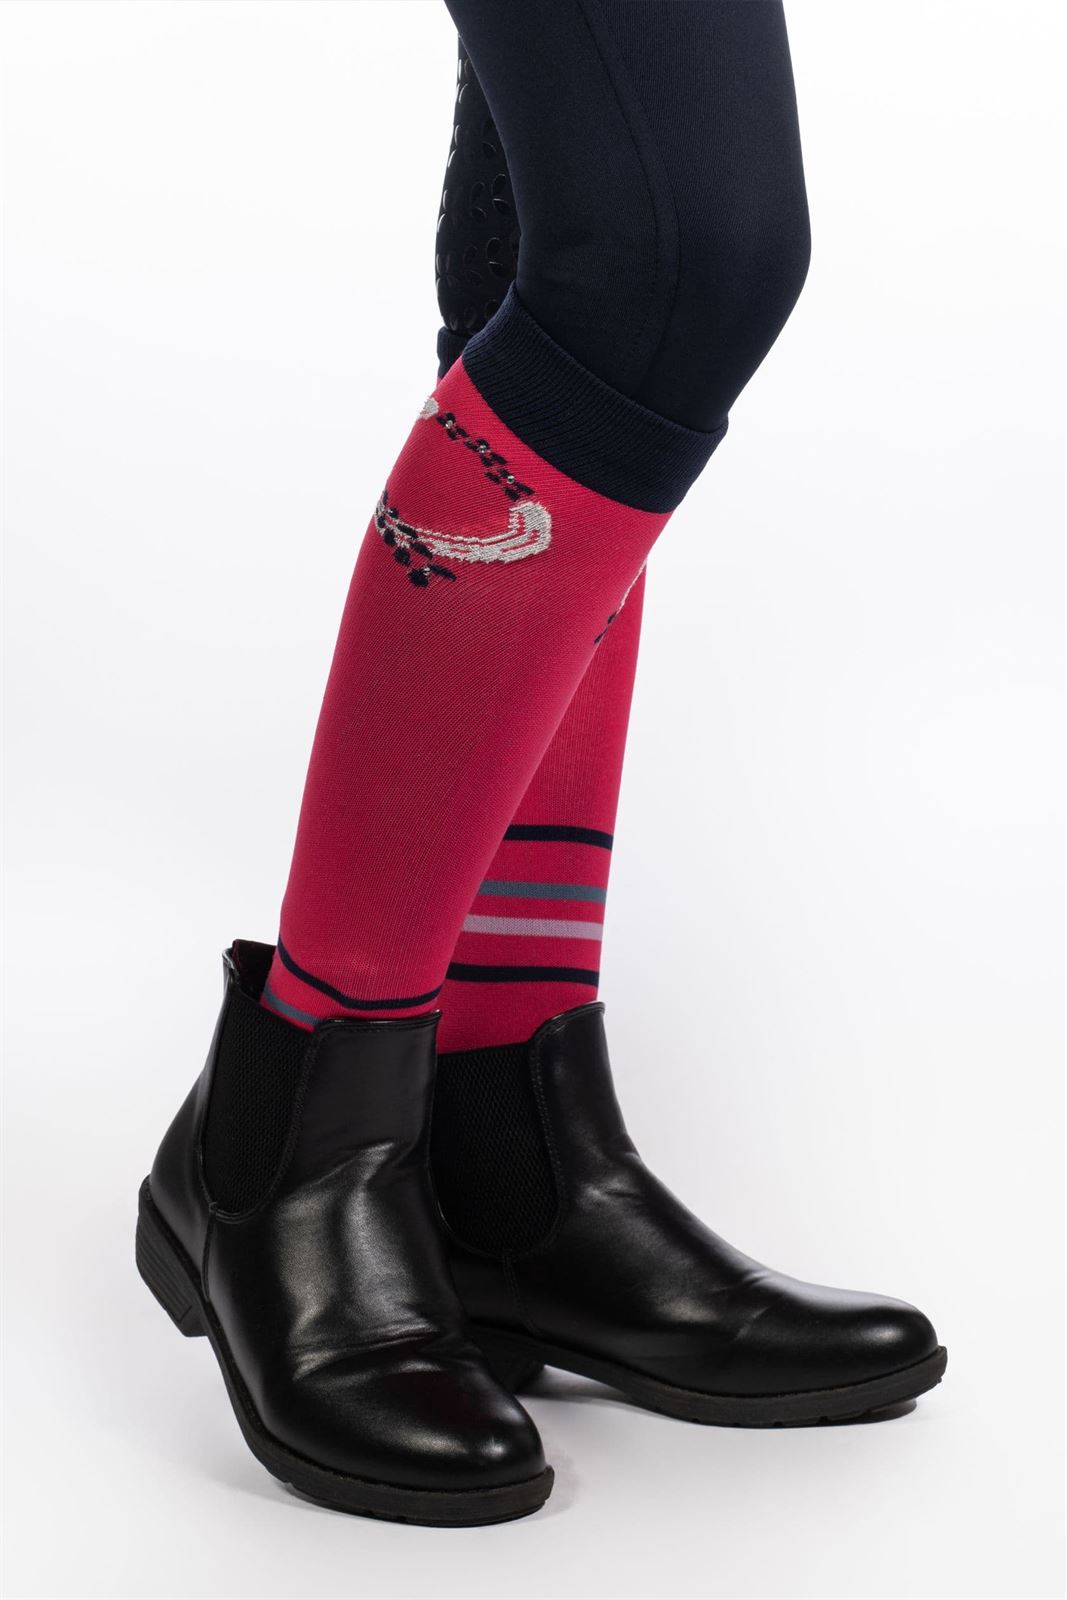 Calcetines HKM Sports Equipment Aymee color rosa talla 30/34 - Imagen 3